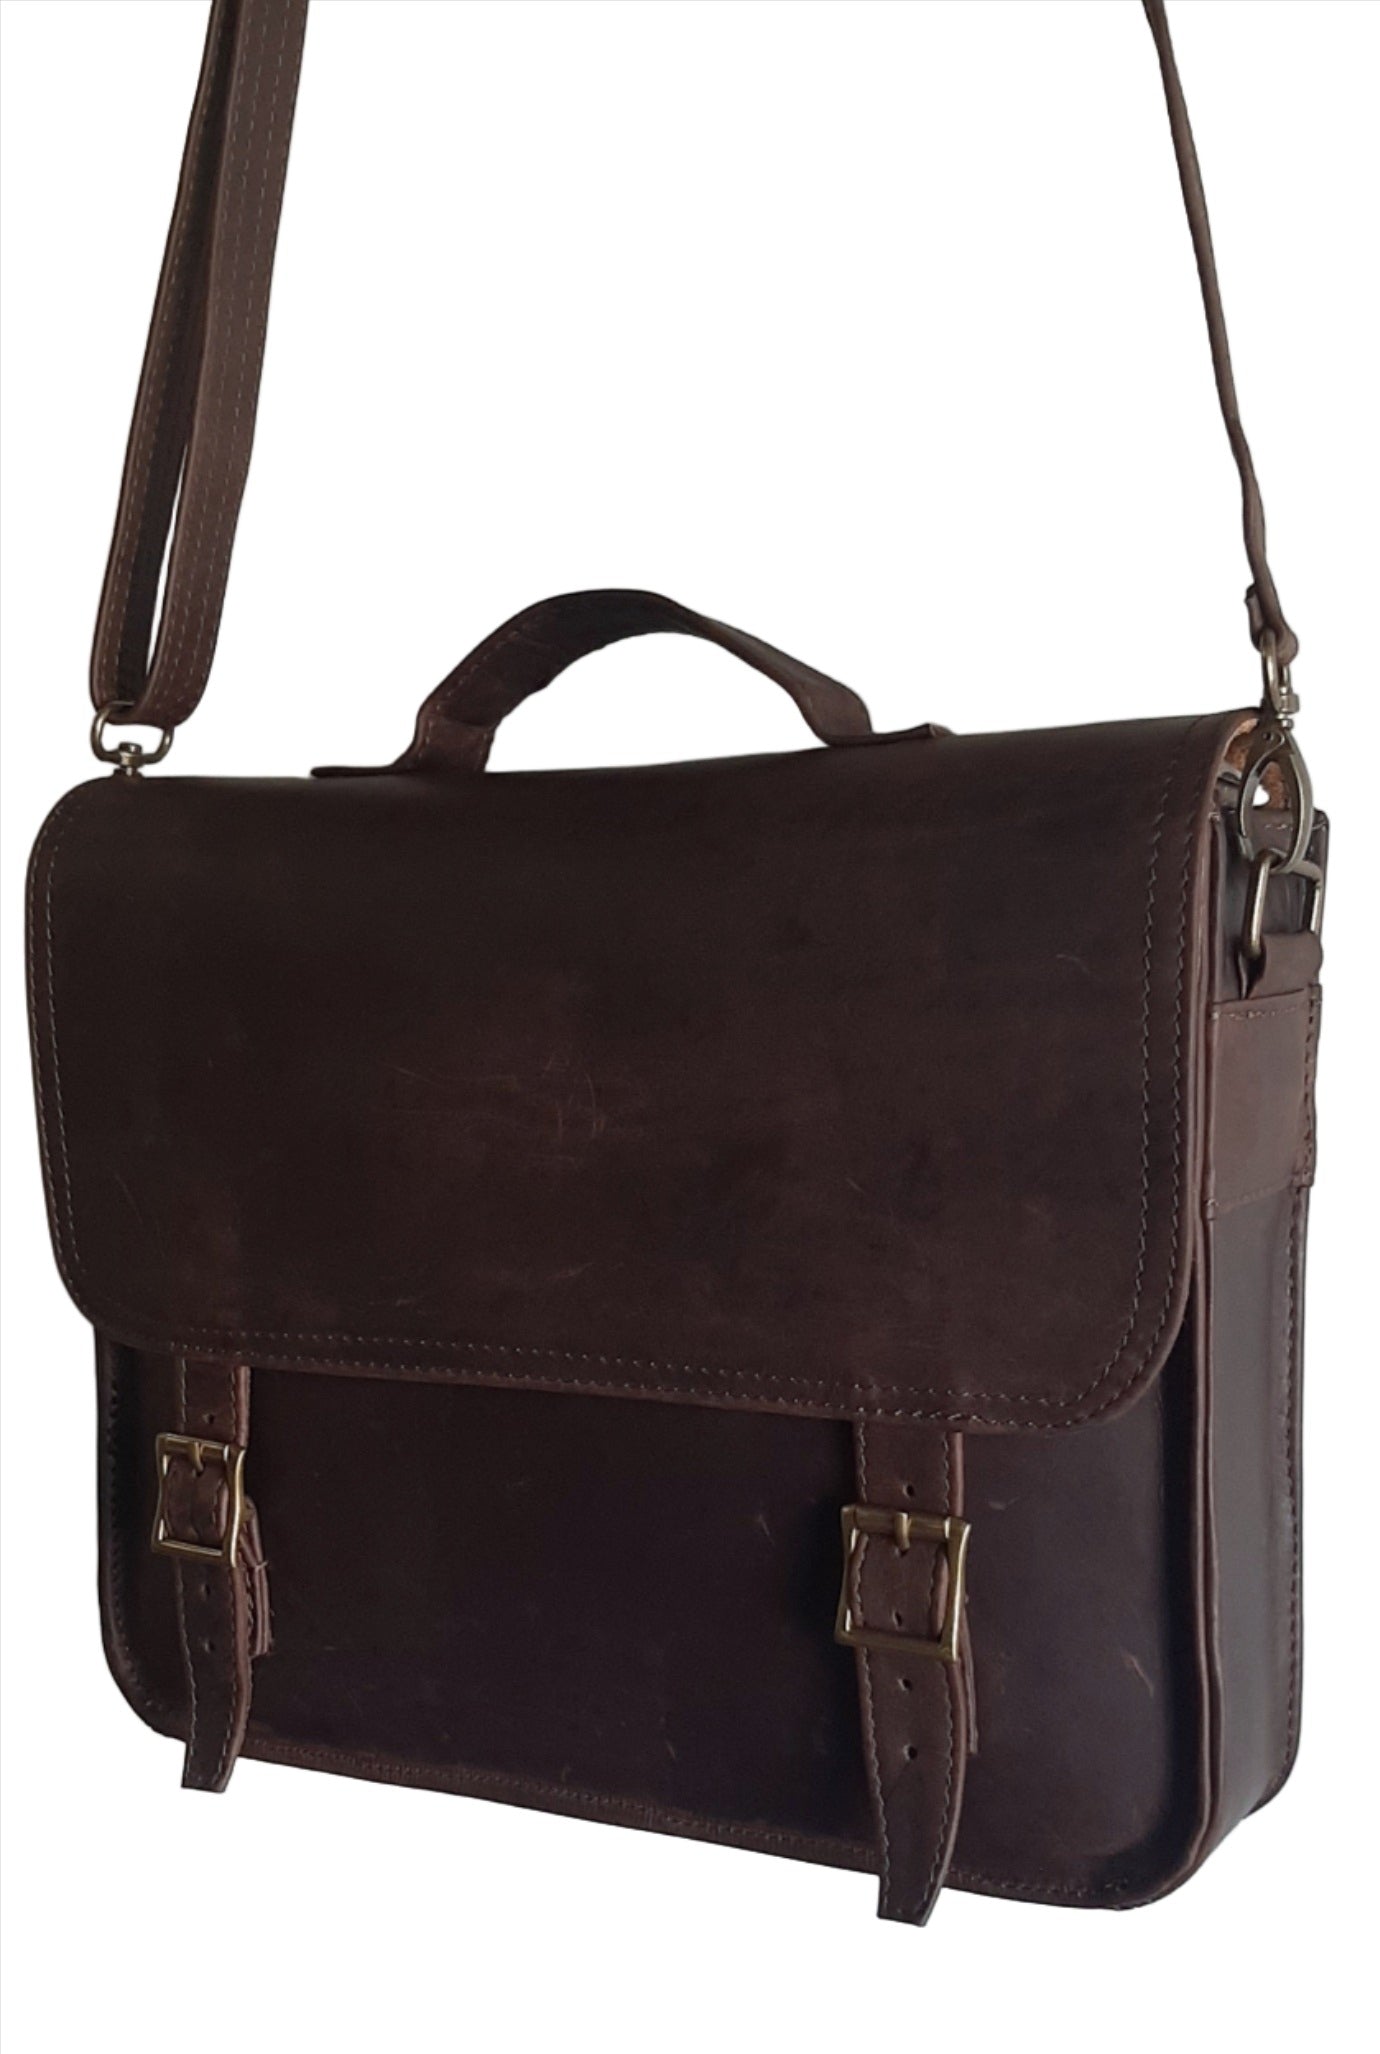 Carryn 13 - 14"leather laptop bag